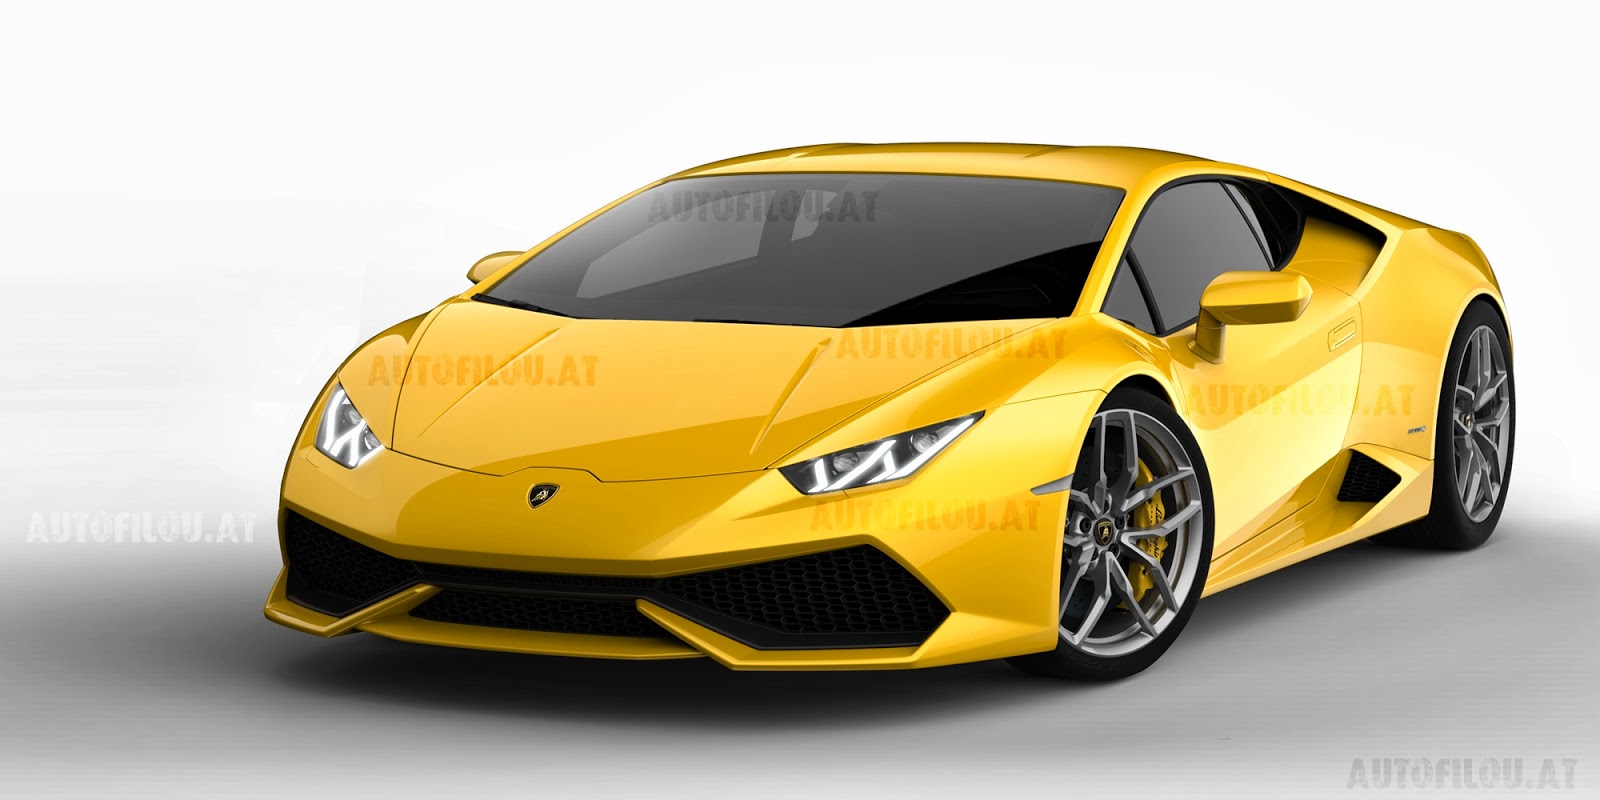 Lamborghini Huracan autofilou at